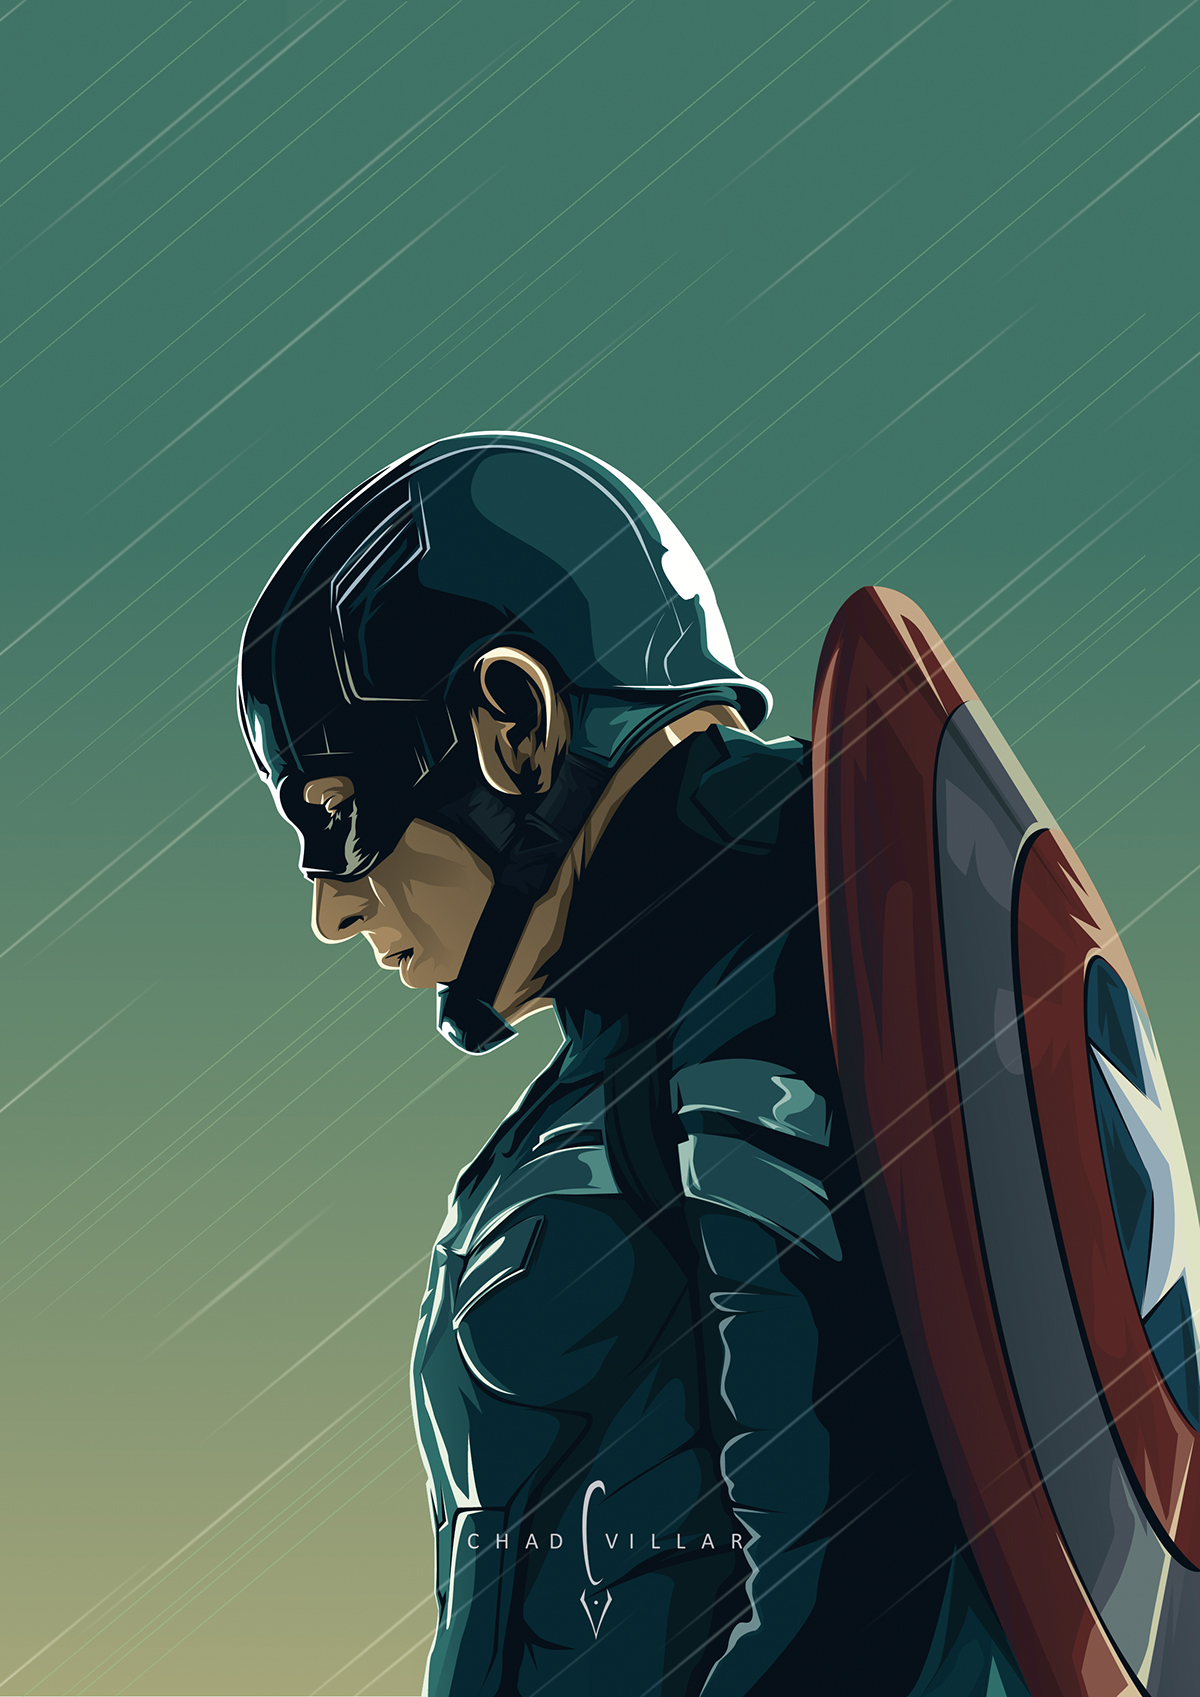 vector captain america Team Cap Civil War comics steve rogers vexel portrait Chris Evans